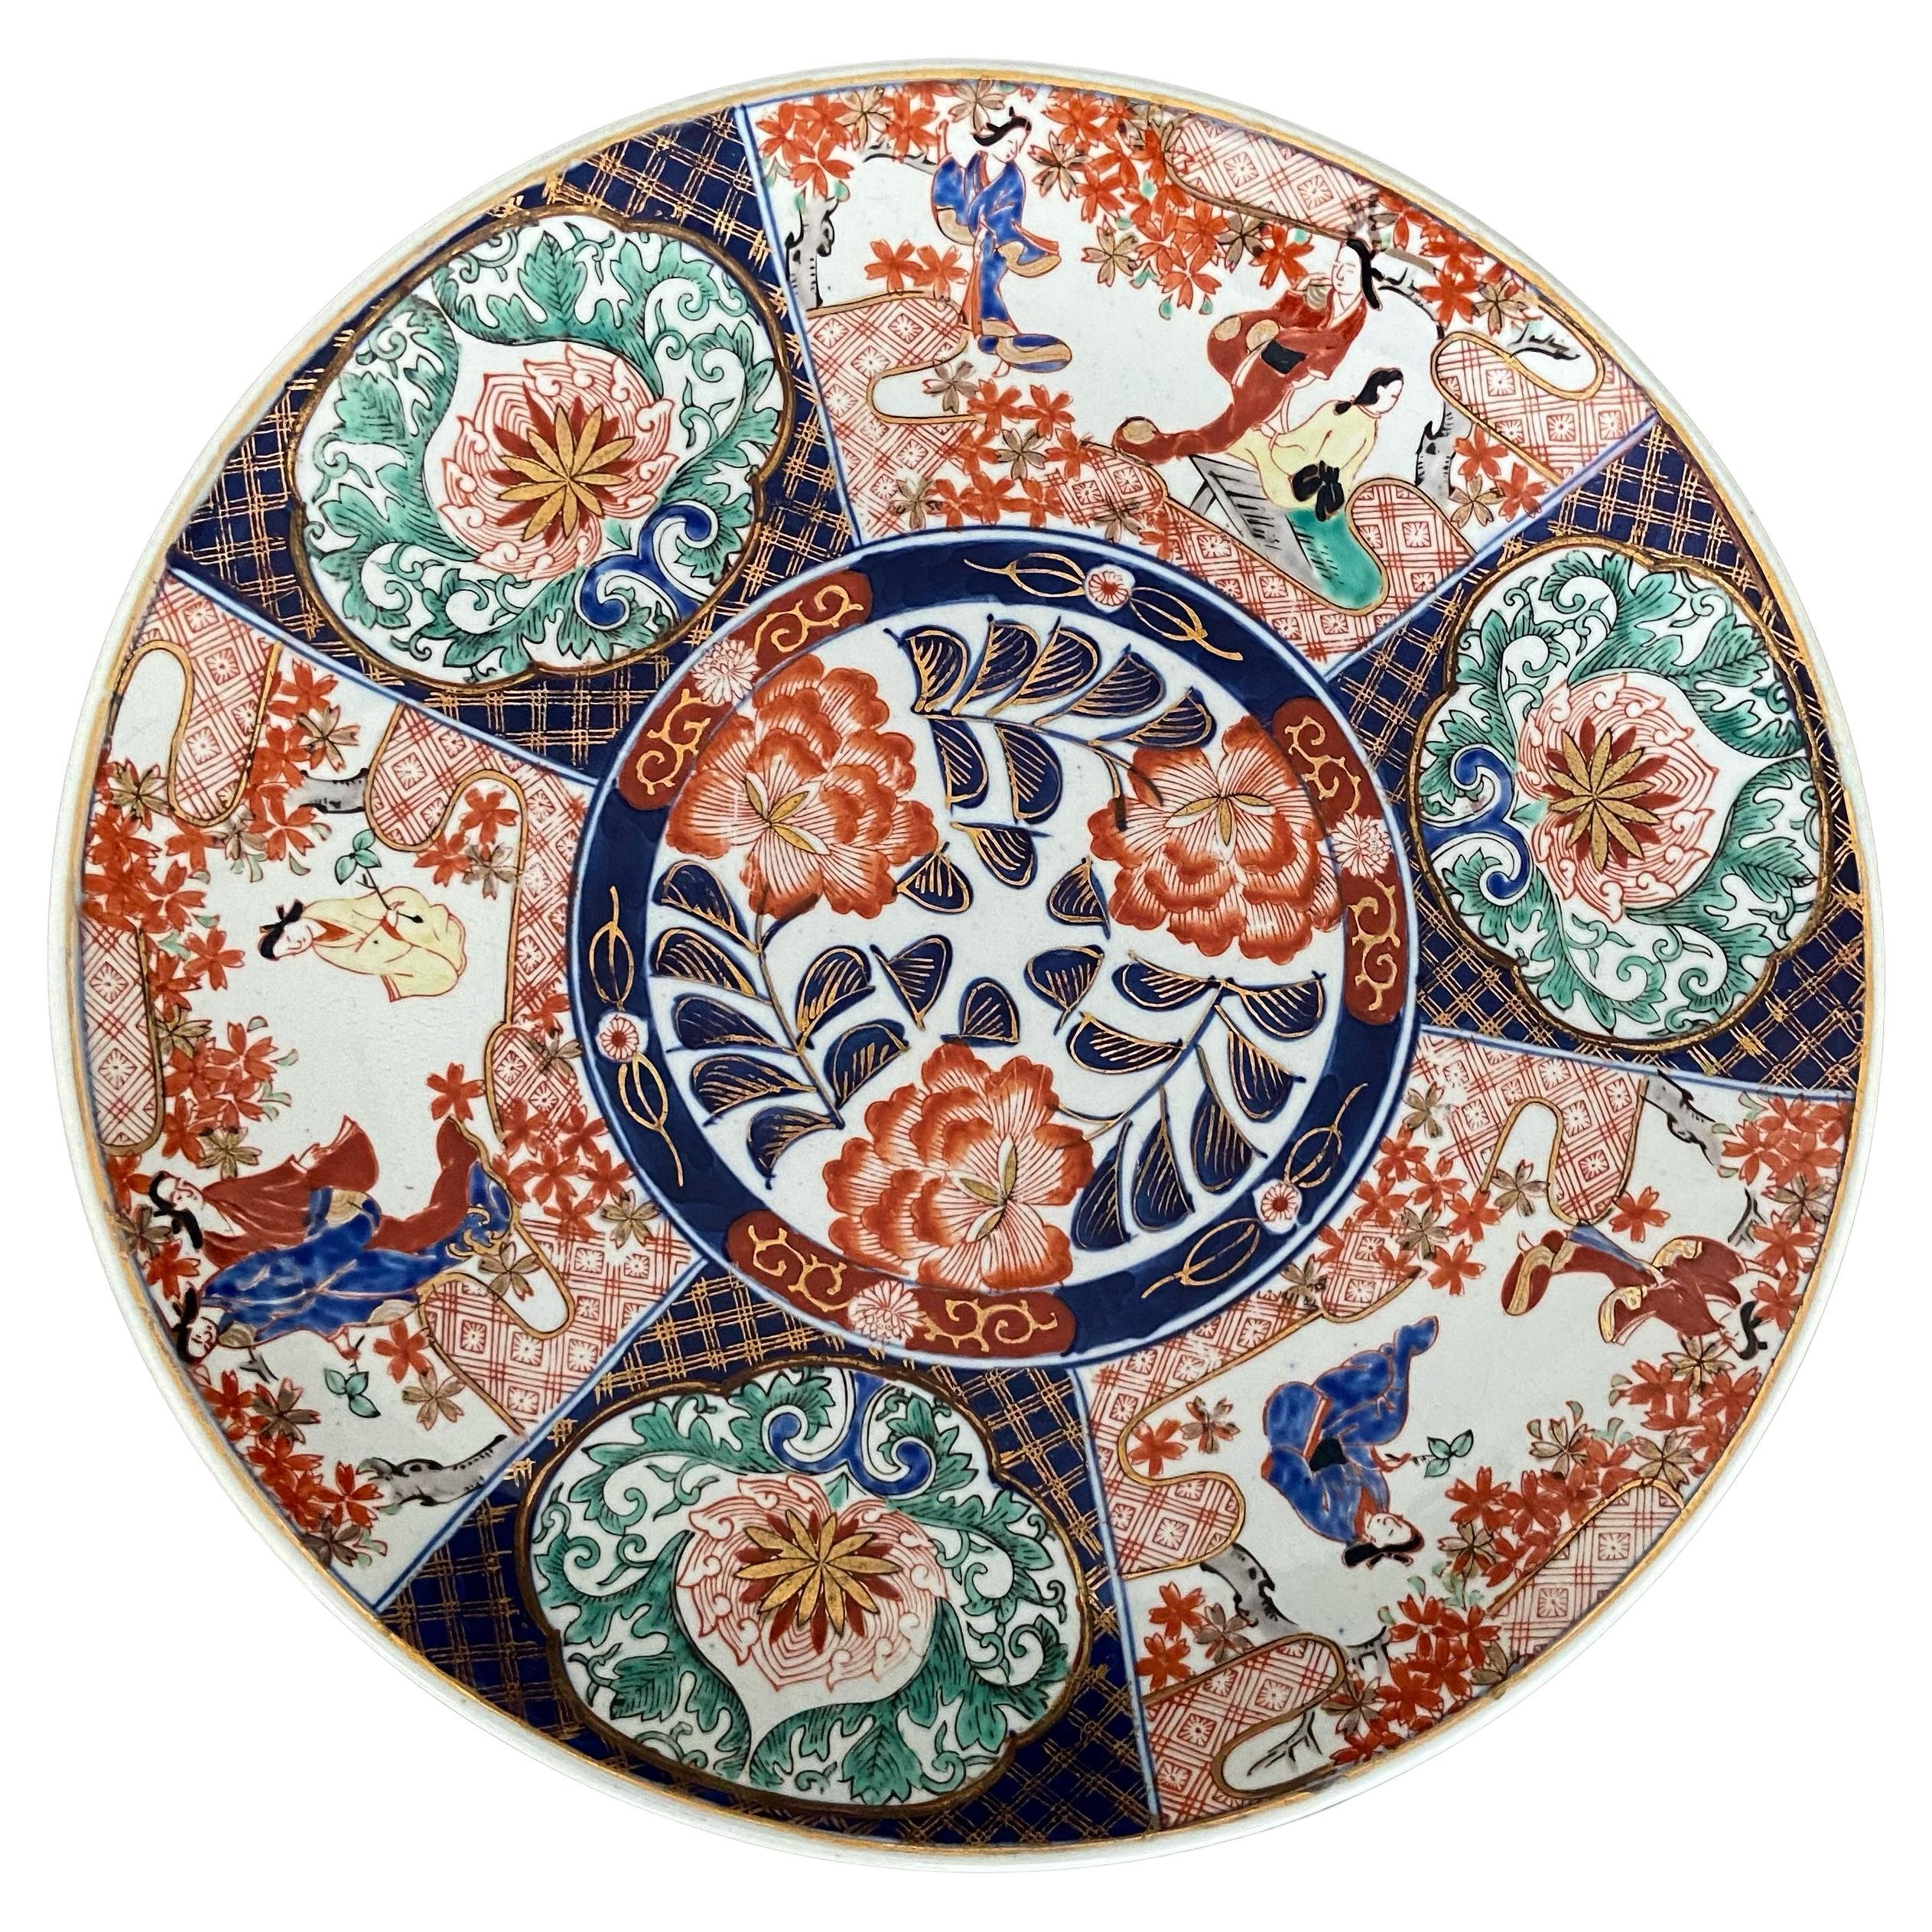 Large Japanese Imari Porcelain Charger